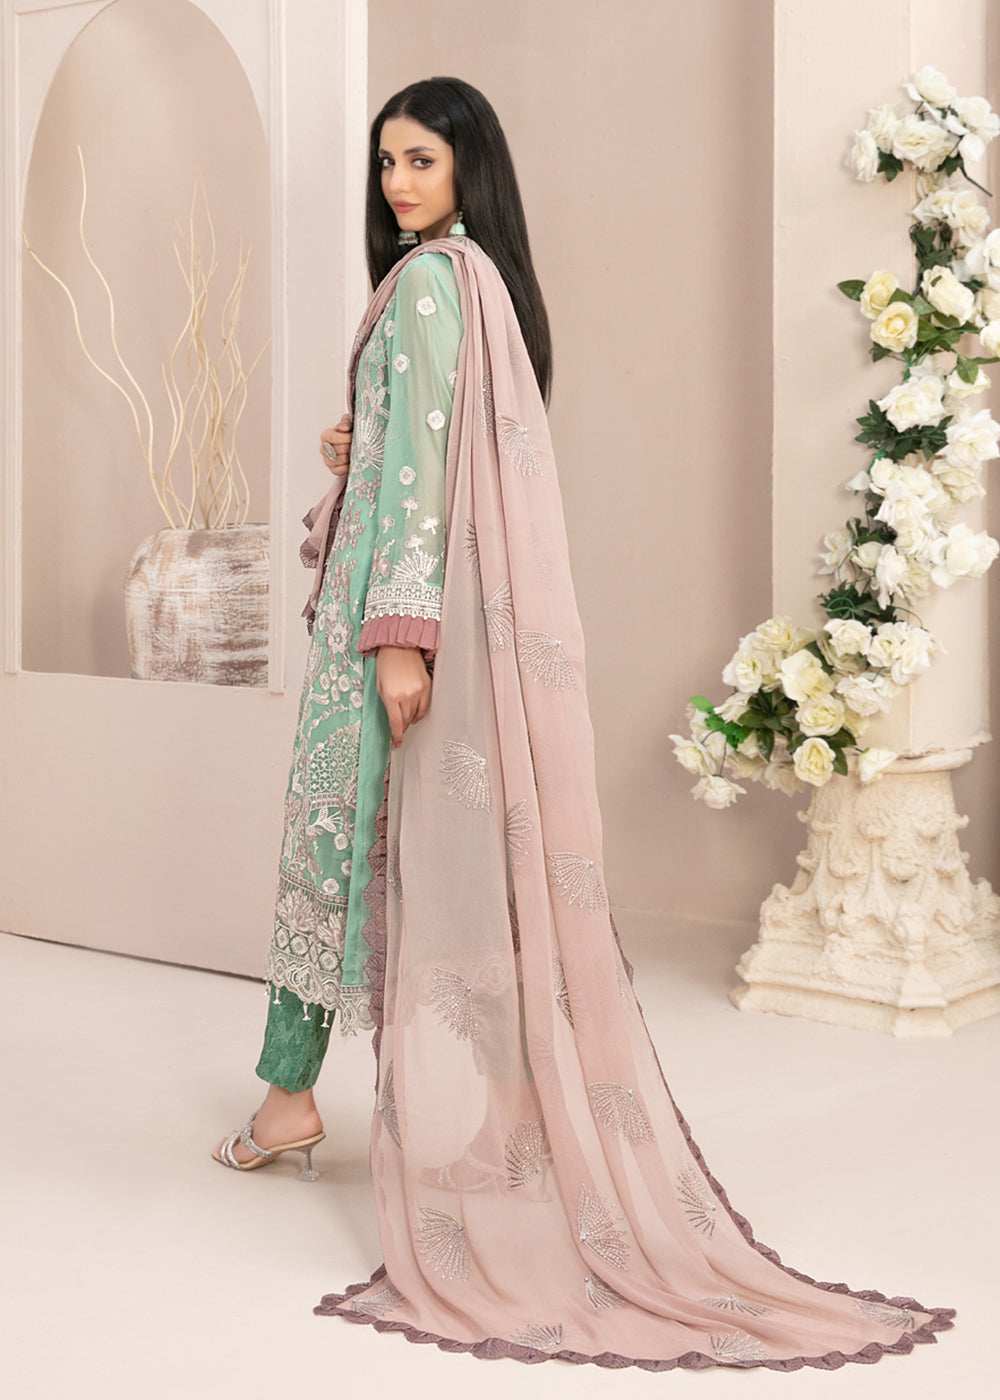 Buy Now Nayara Formal Wear 2023 by Tawakkal Fabrics - D-8688 Online in USA, UK, Canada & Worldwide at Empress Clothing.